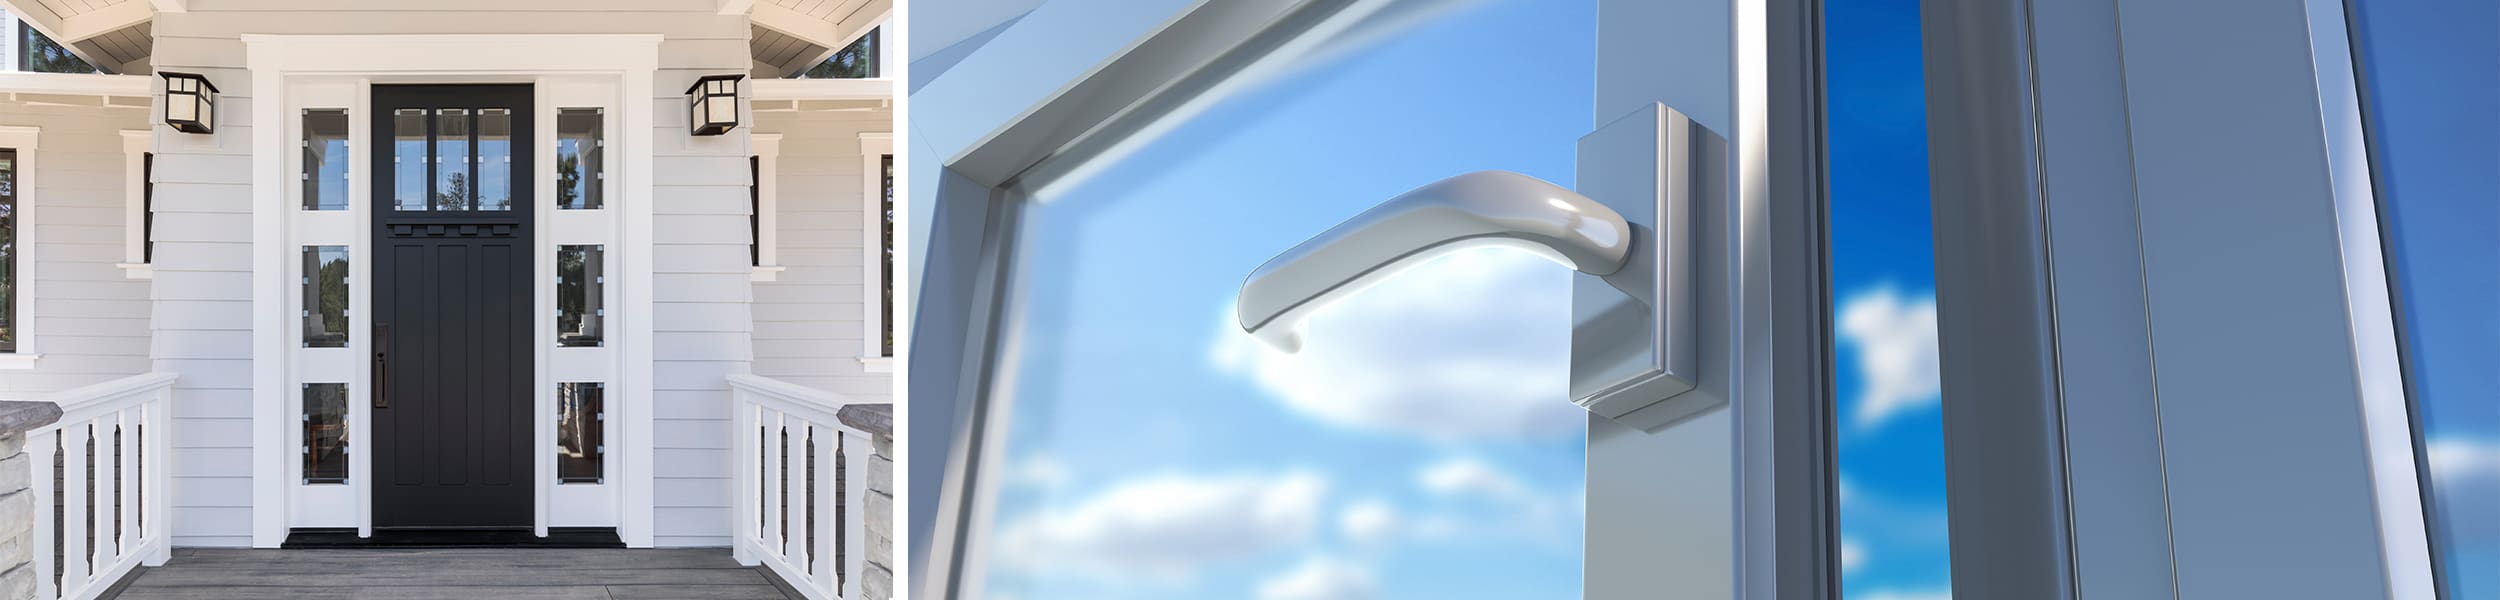 Aurora Plastics provides versatile flexible & rigid PVC compound solutions for indoor & outdoor window & door applications.